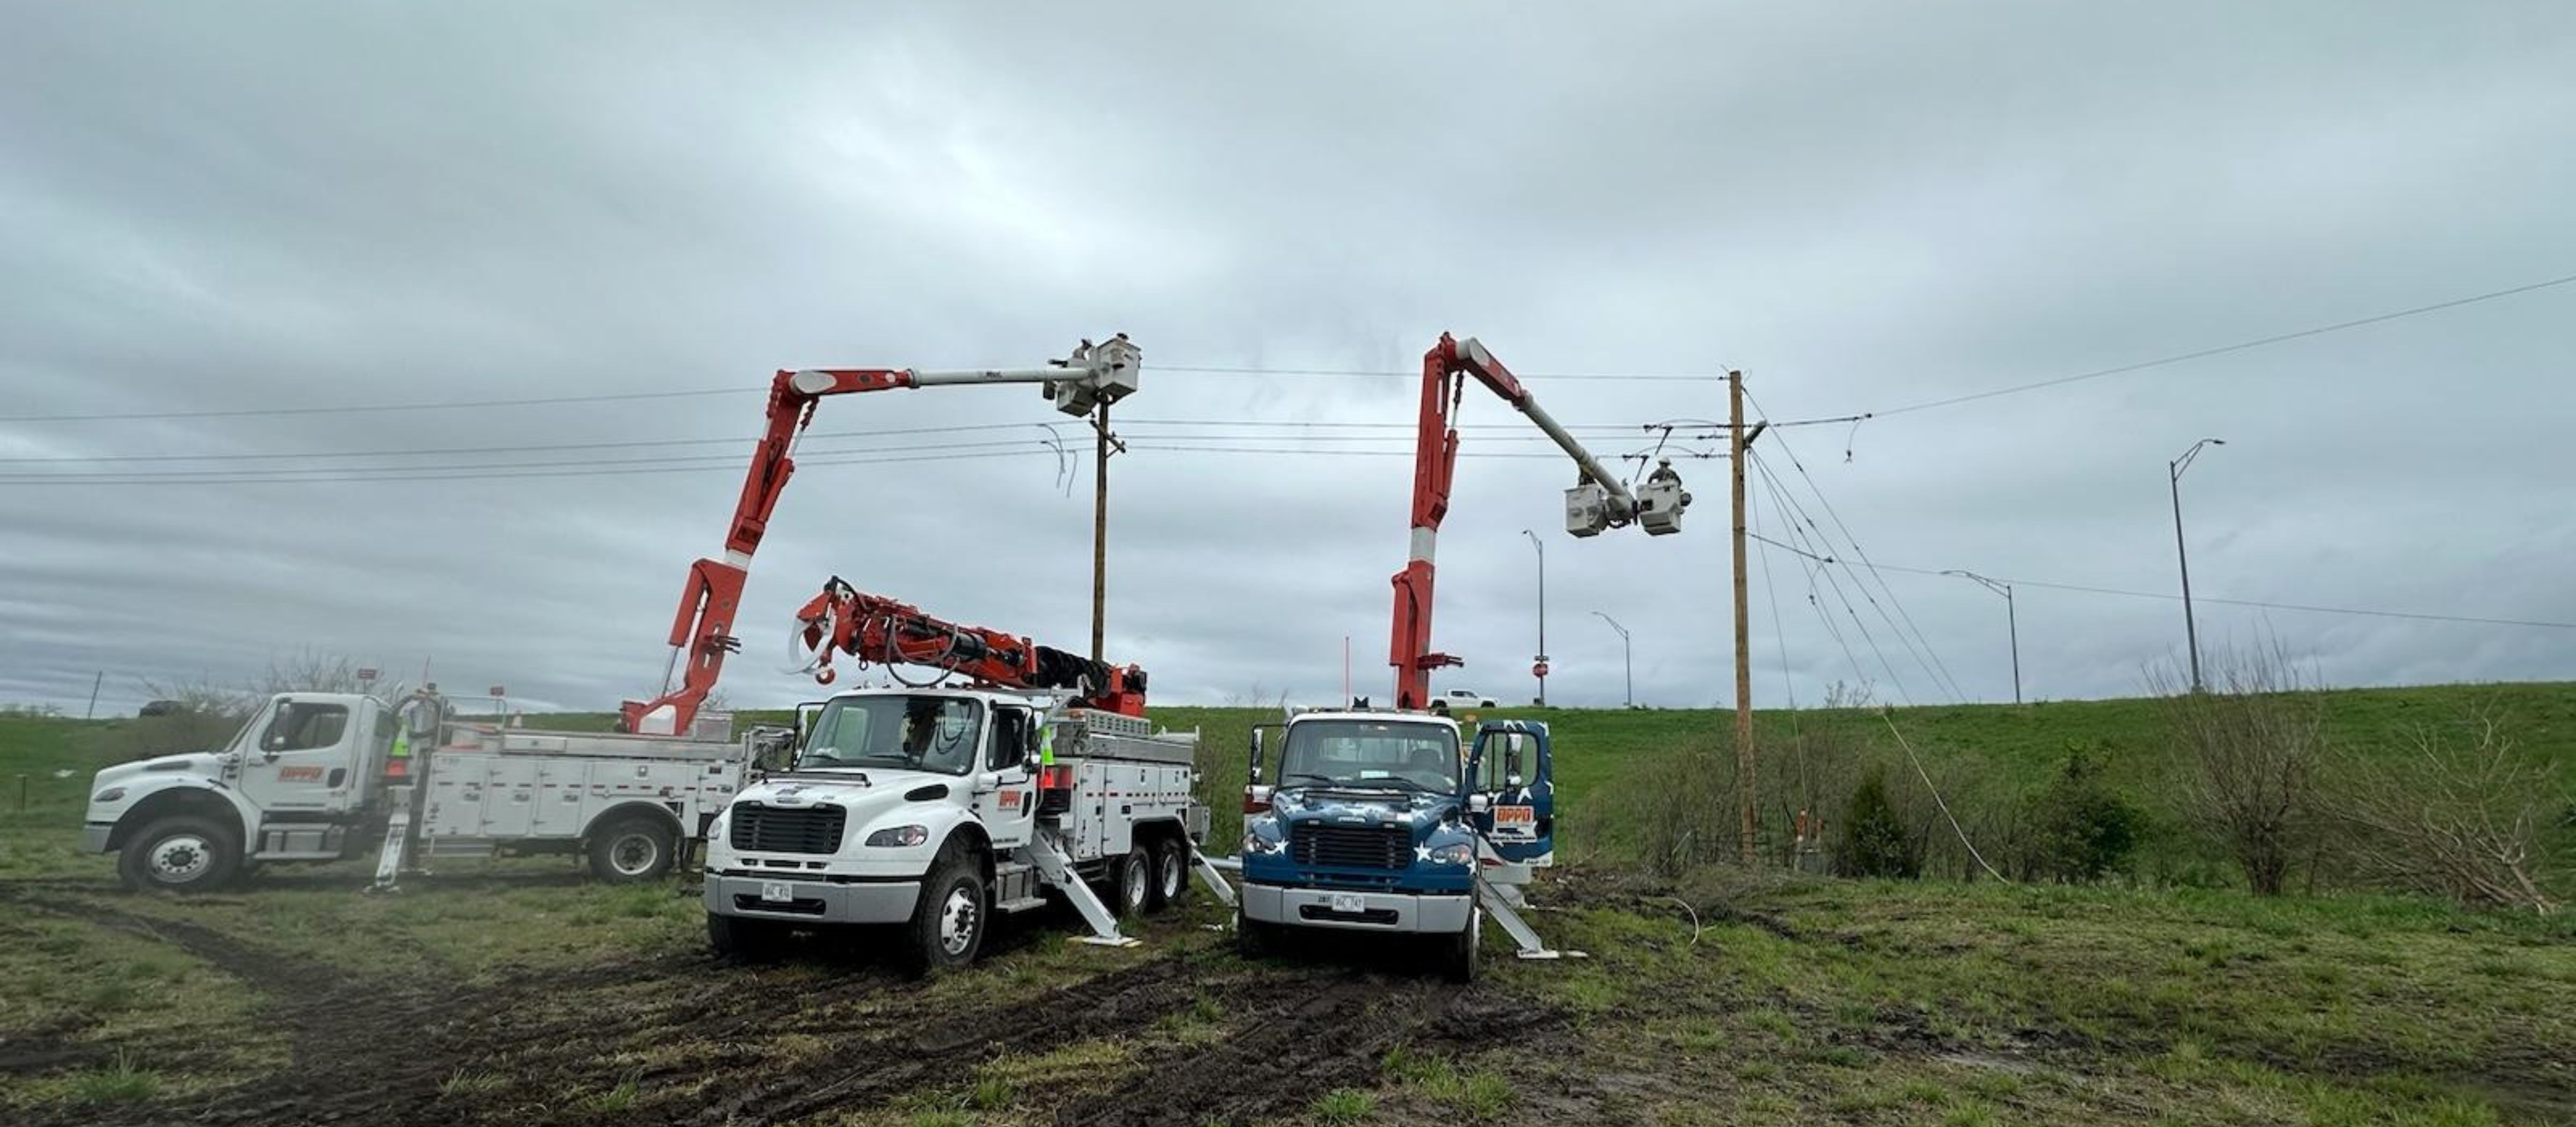 OPPD crews repairing damaged power lines